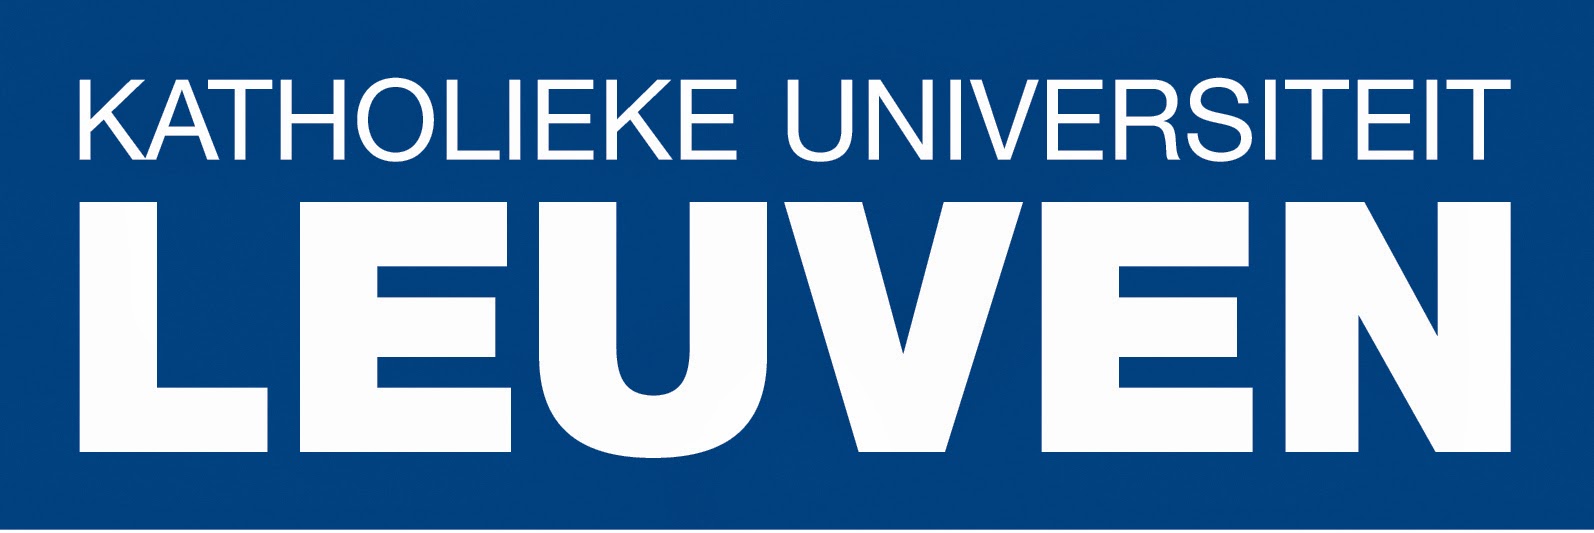 KU Leuven Travel Specialization Grants for Researchers, Belgium